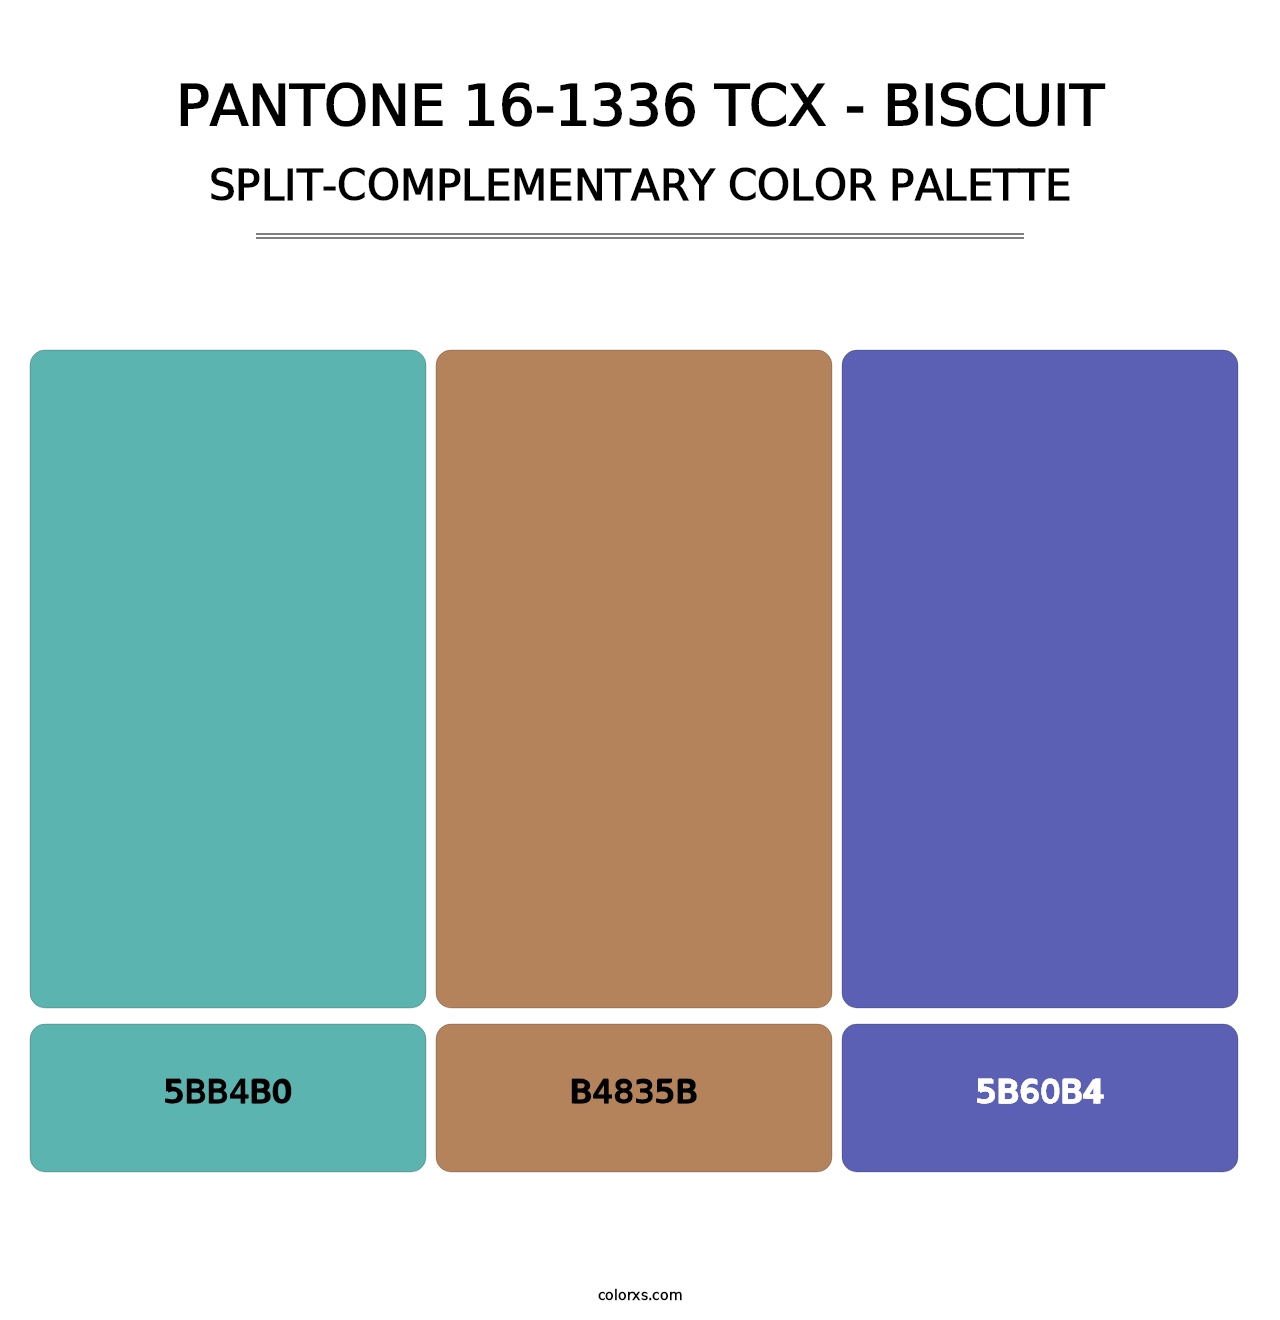 PANTONE 16-1336 TCX - Biscuit - Split-Complementary Color Palette